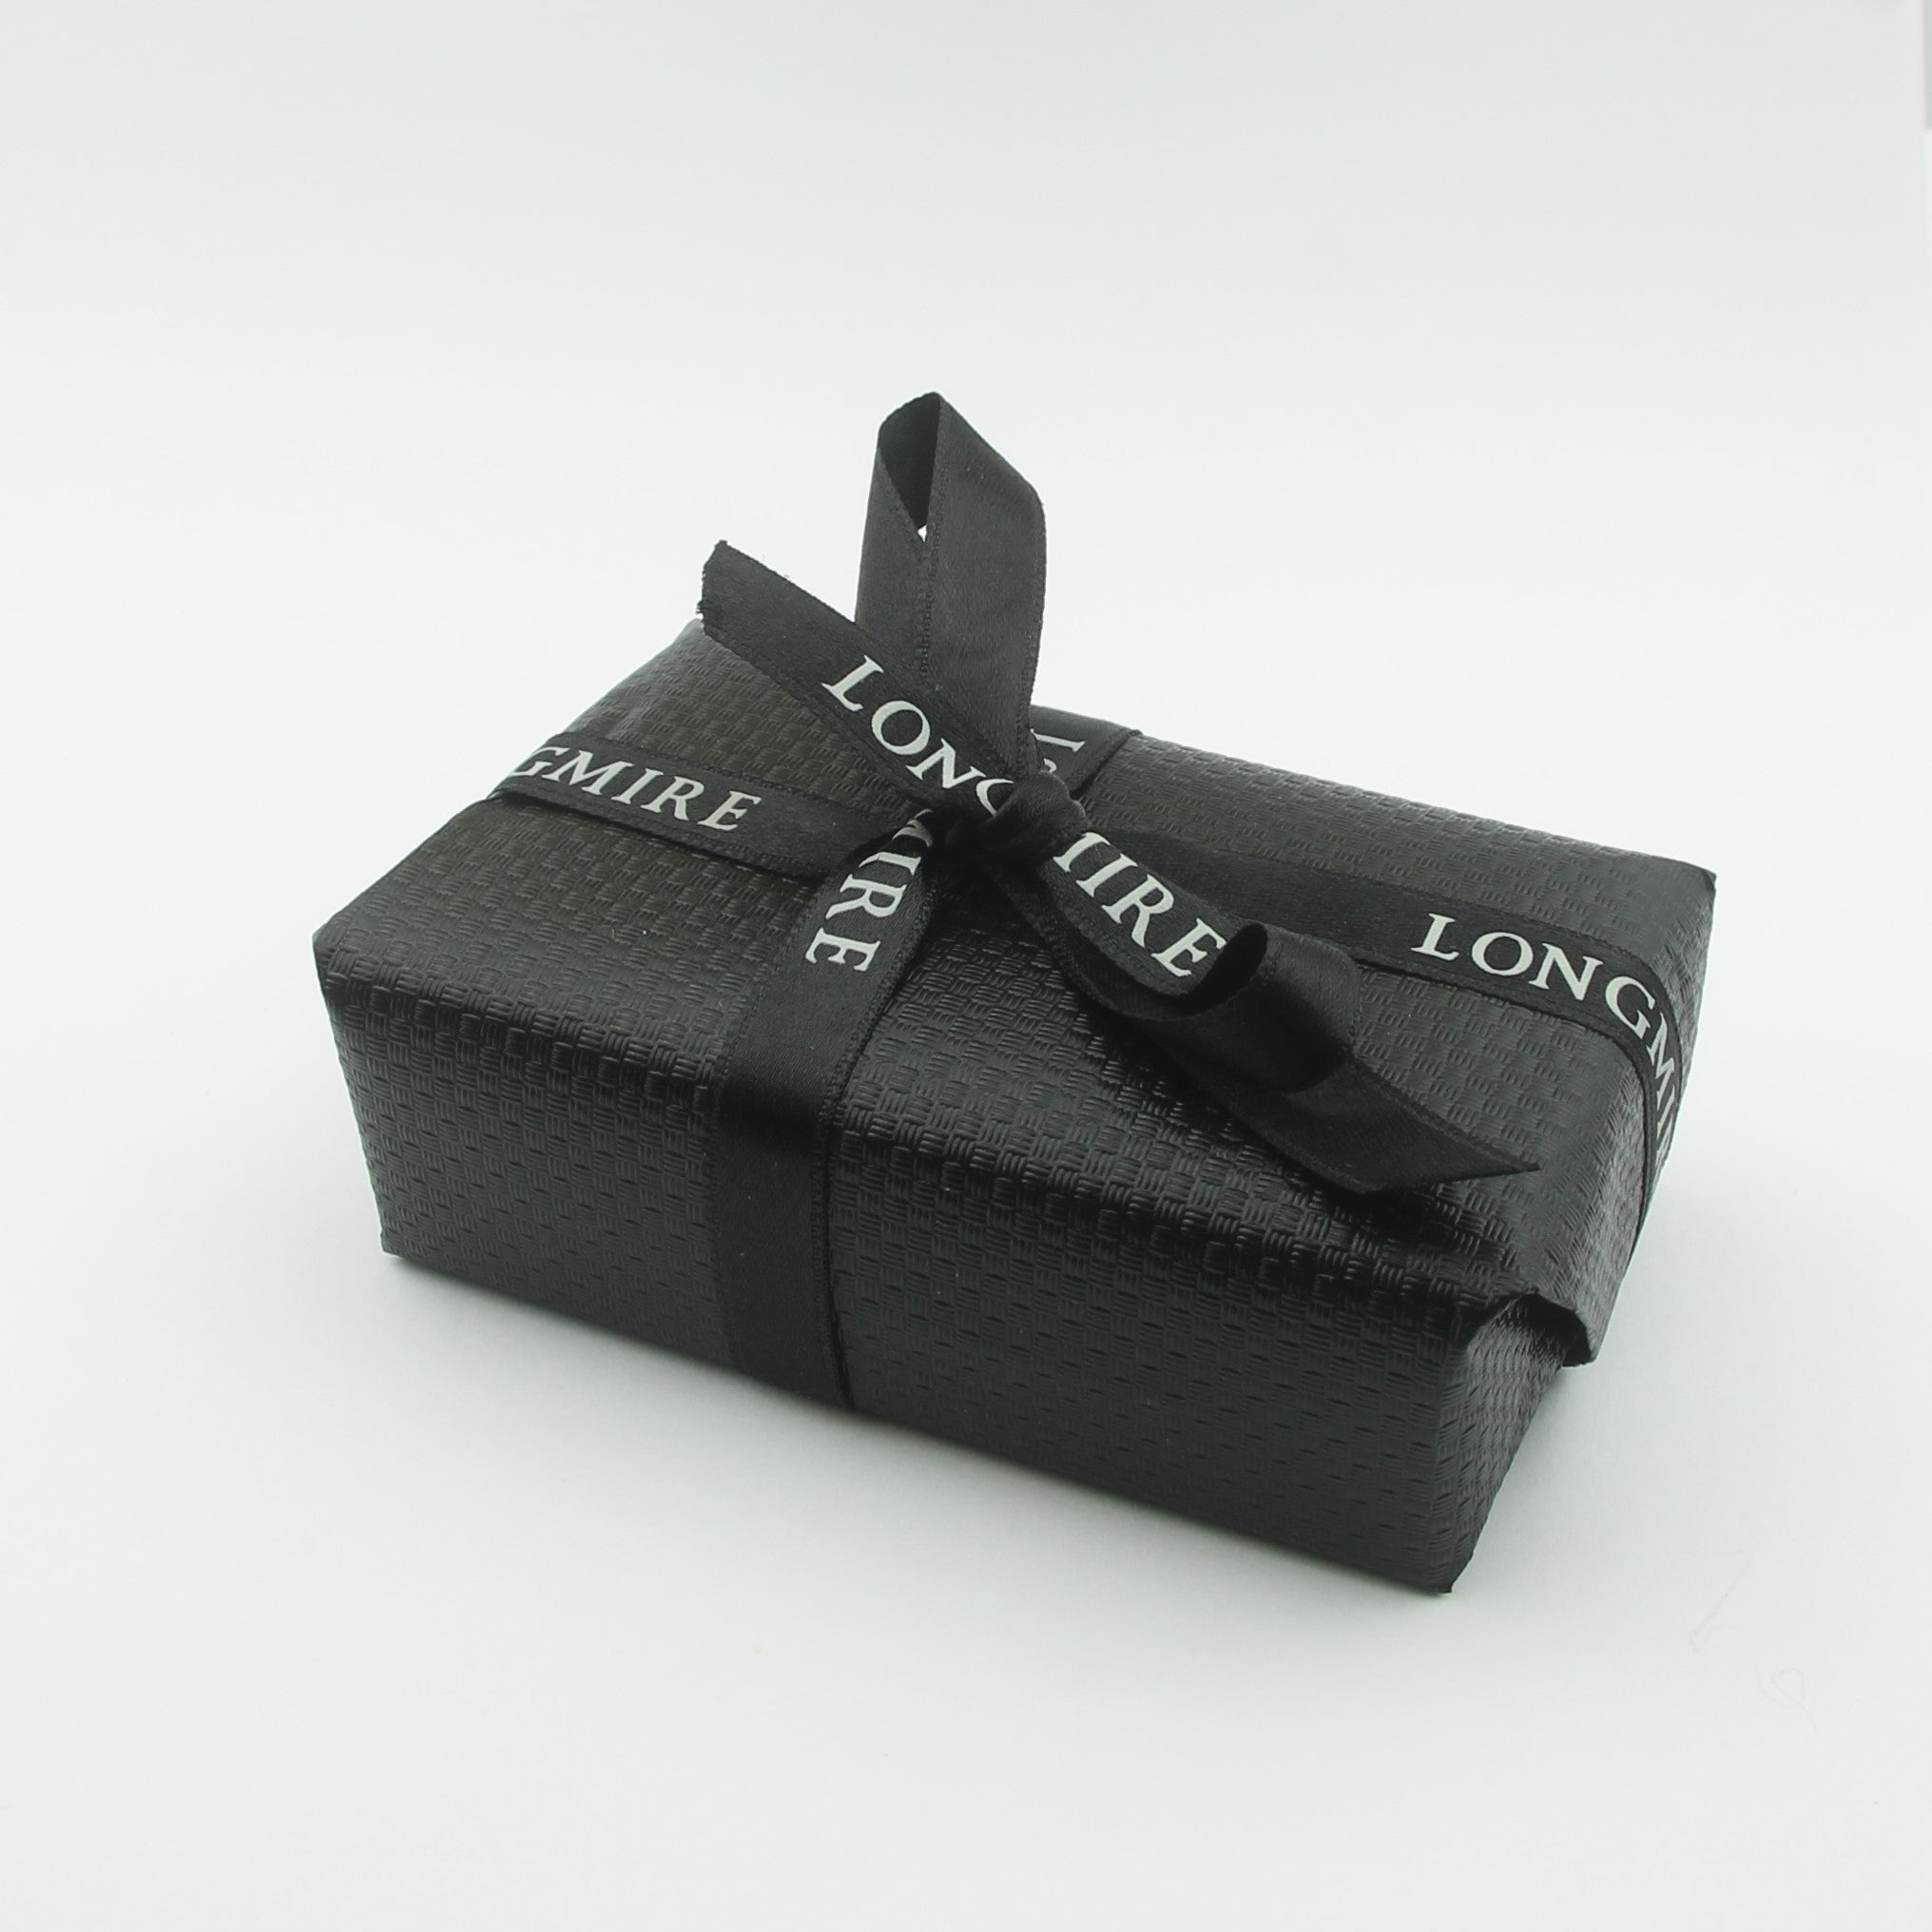 Longmire wrapped gift box